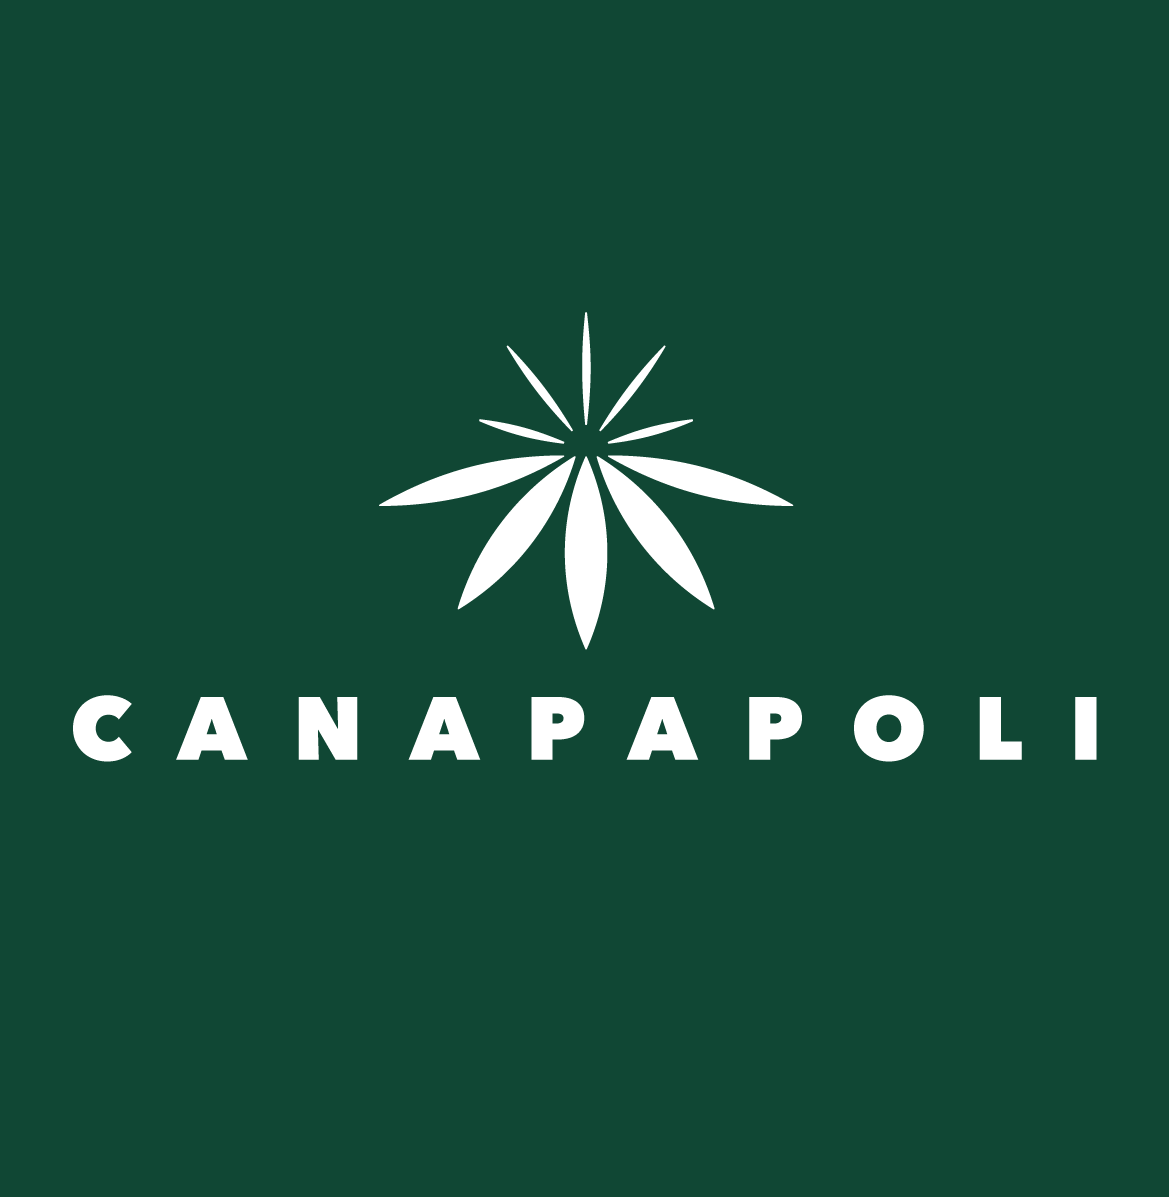 Canapapoli